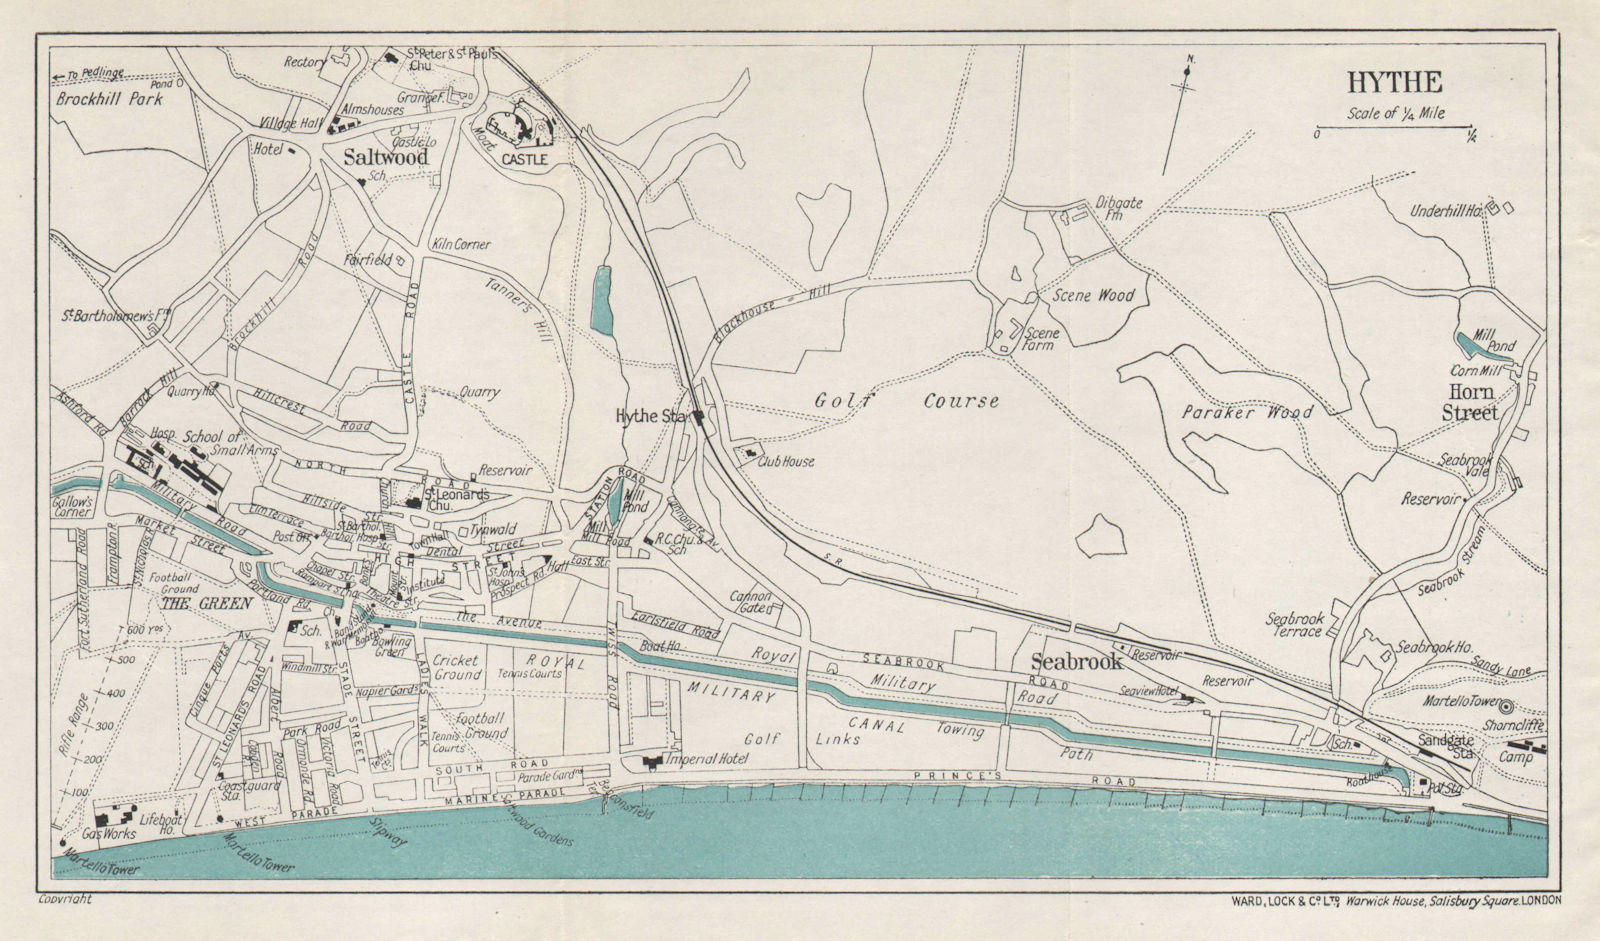 HYTHE vintage tourist town city resort plan. Kent. WARD LOCK 1928 old map